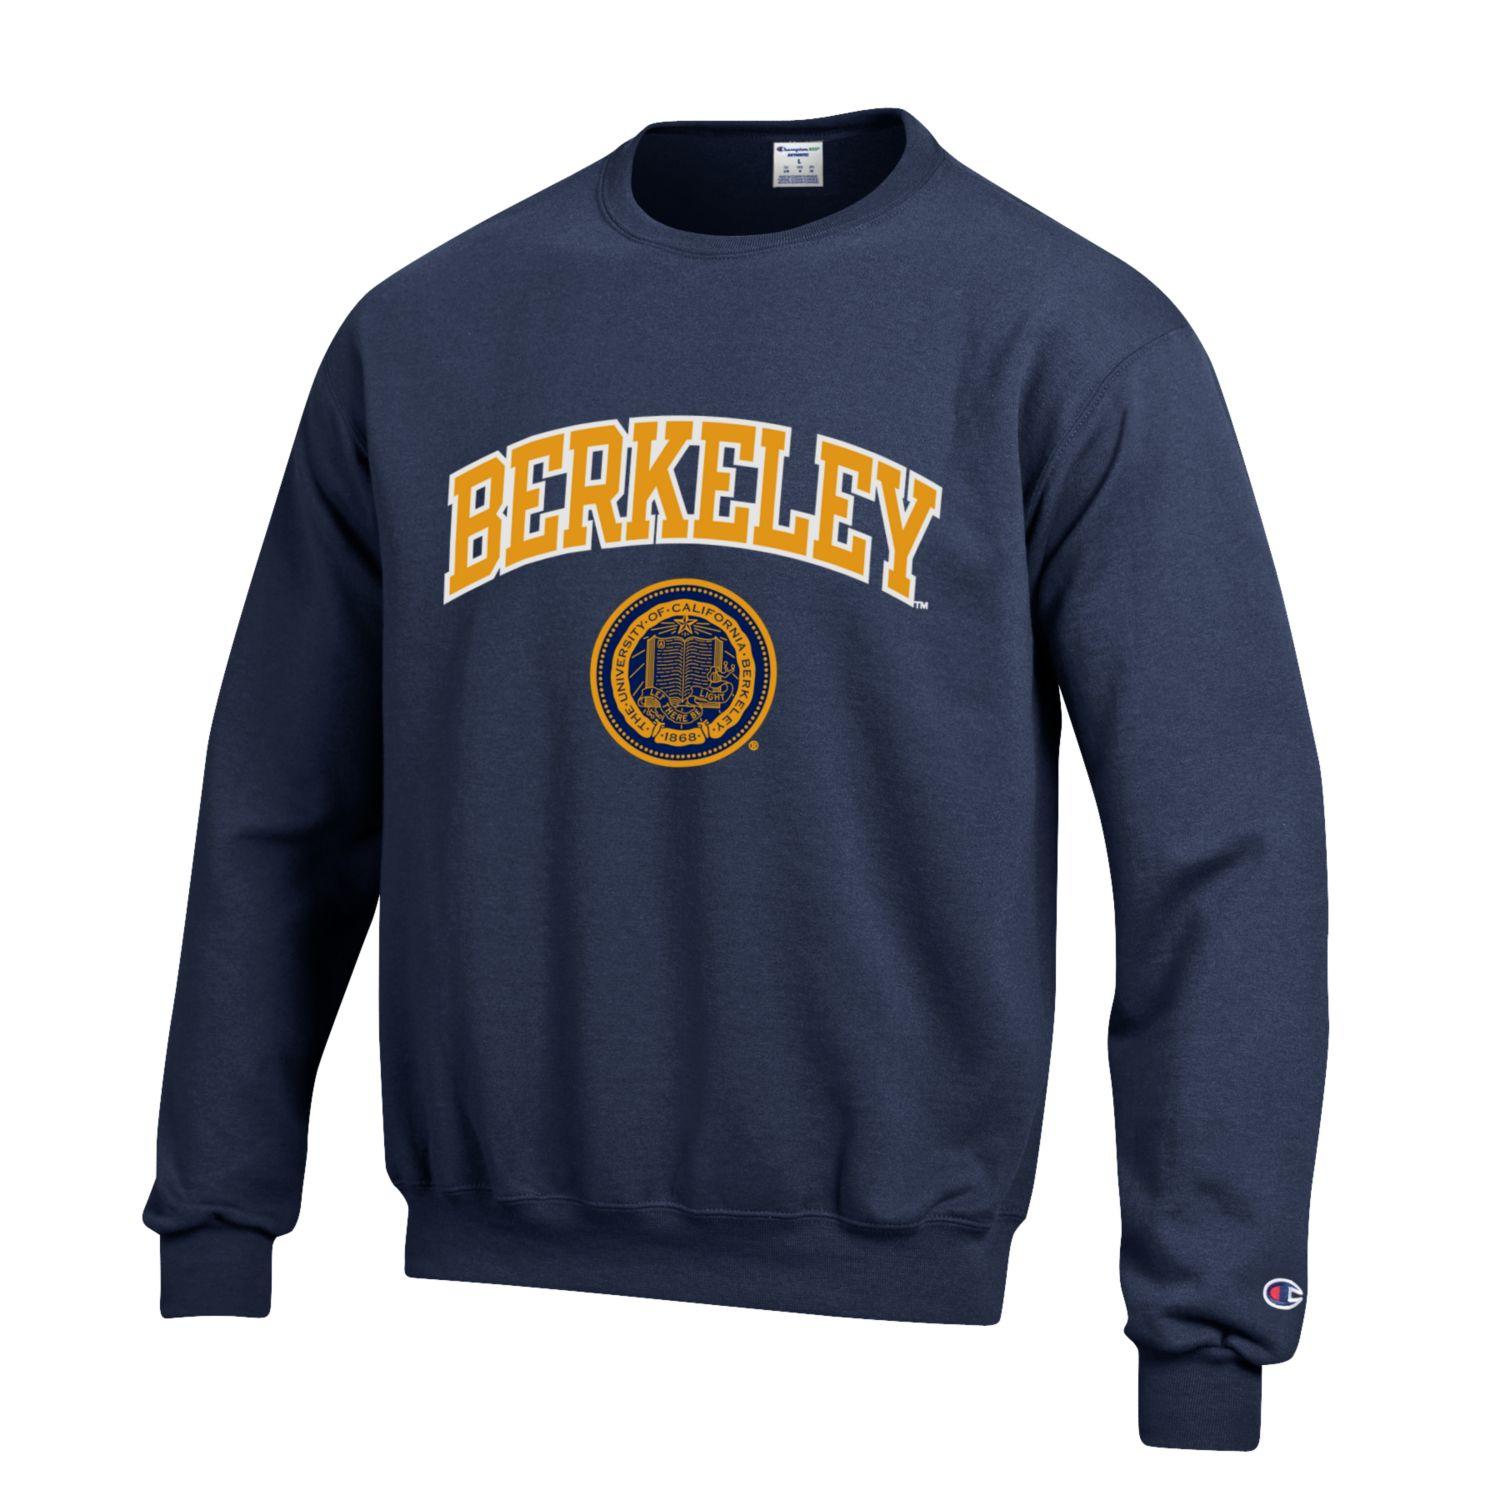 U.C. Berkeley arch & seal applique Champion crew-neck sweatshirt-Navy-Shop College Wear